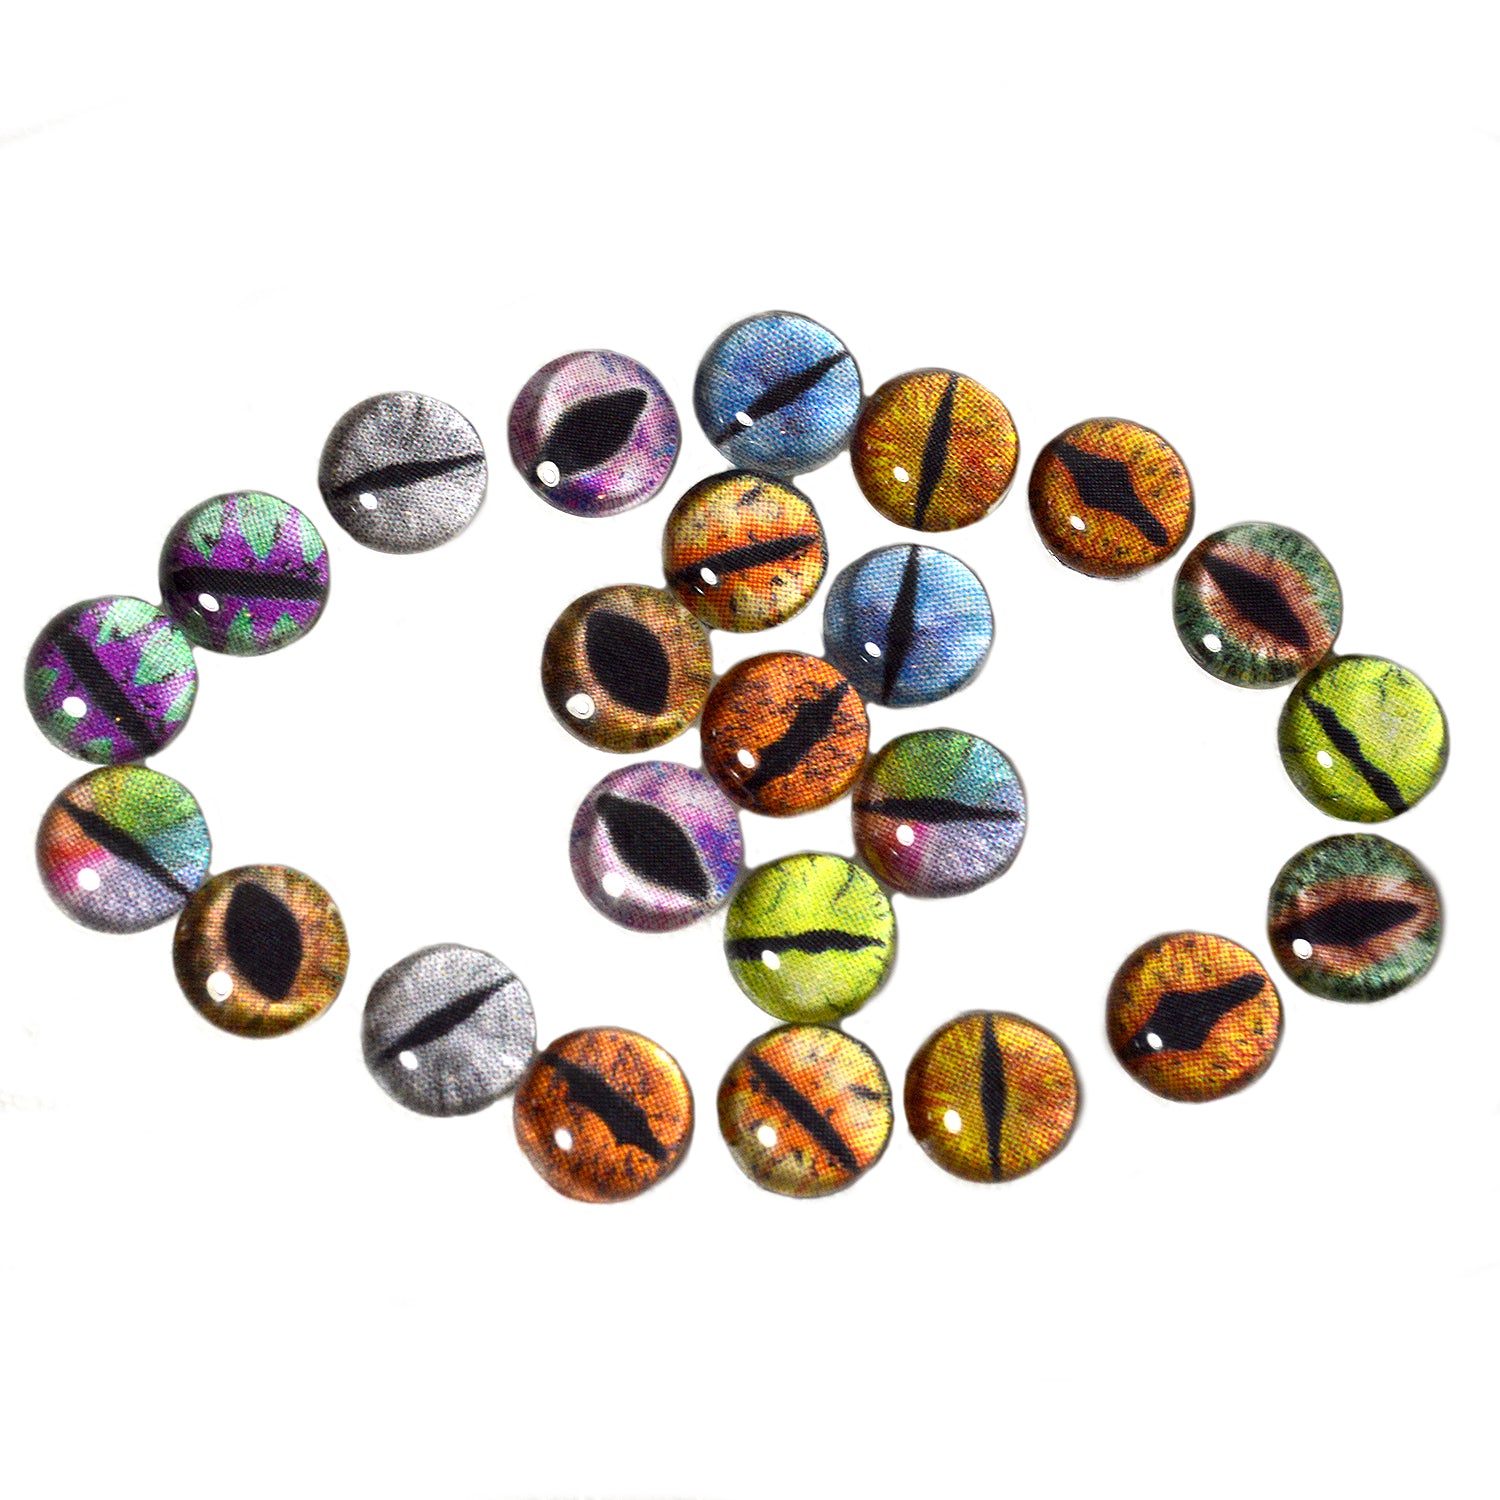 12 Pairs of 8mm Dragon Glass Eyes – Handmade Glass Eyes